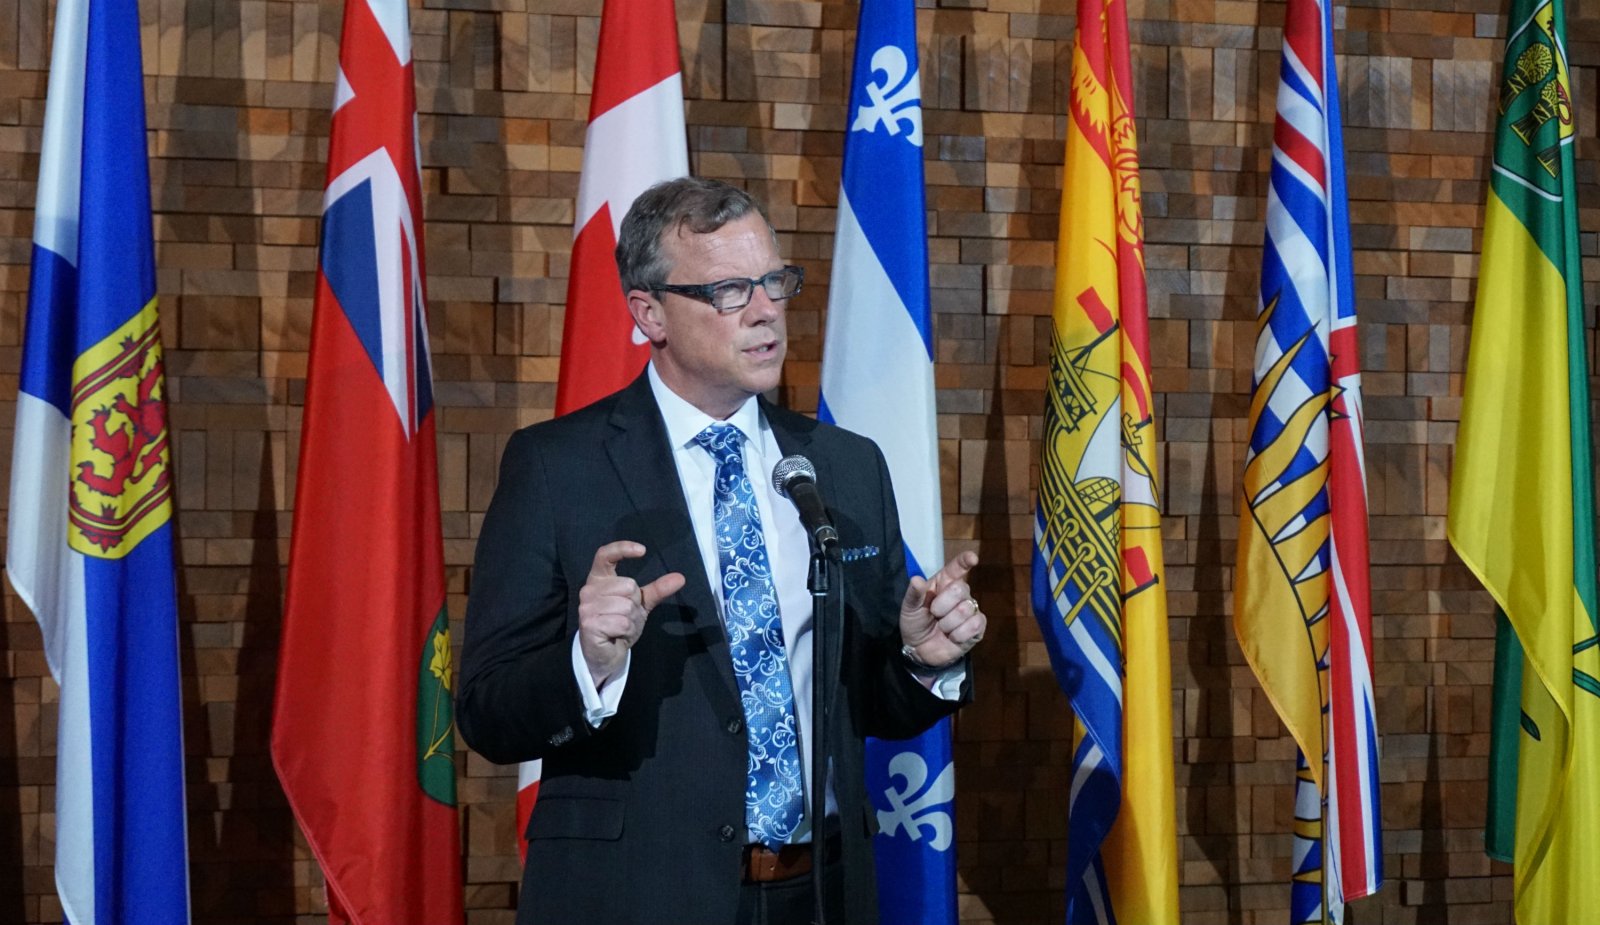 Brad Wall, Saskatchewan, carbon tax, carbon pricing, provincial election